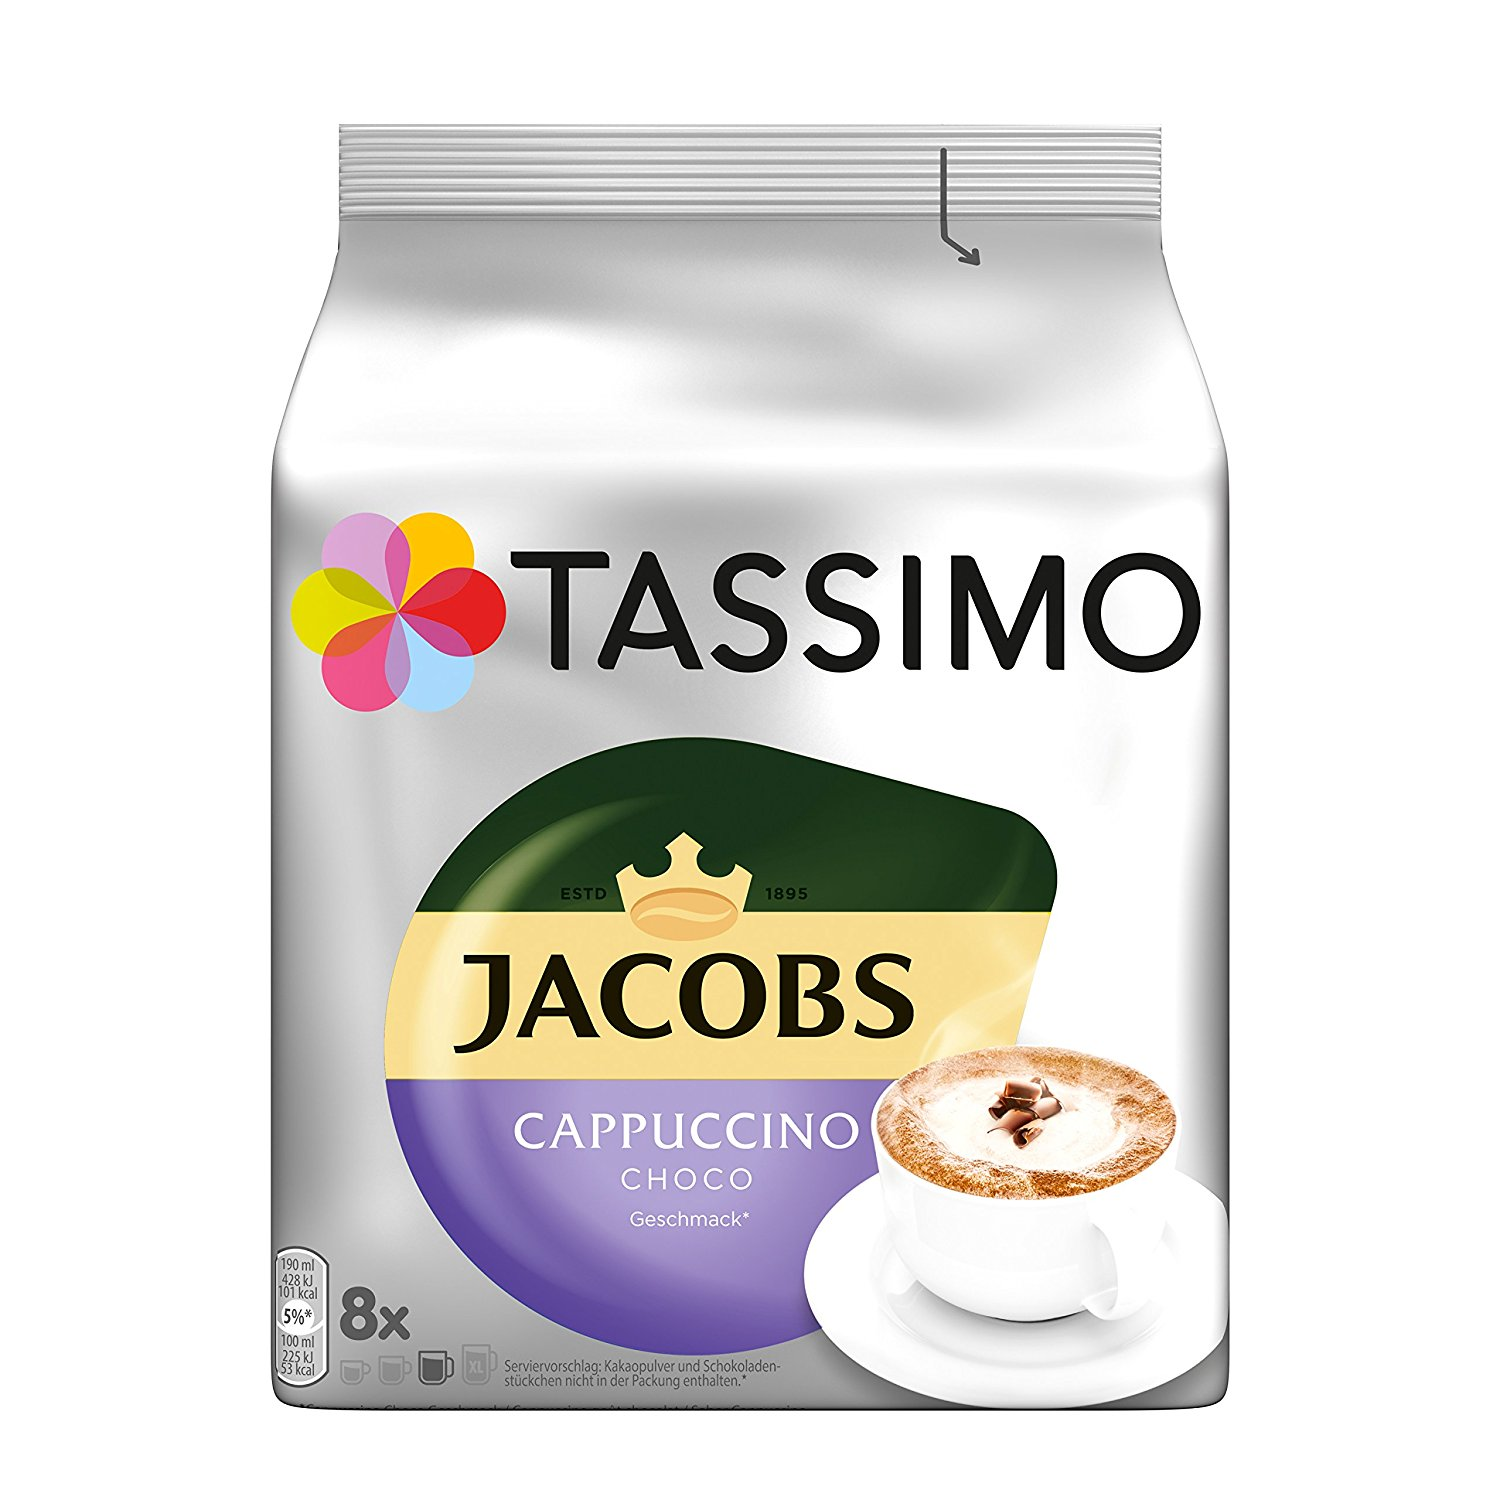 Jacobs Disc Getränke Kaffeekapseln Schokogeschmack Choco T Cappuccino 5 (T-Disc TASSIMO System)) (Tassimo Maschine 8 x